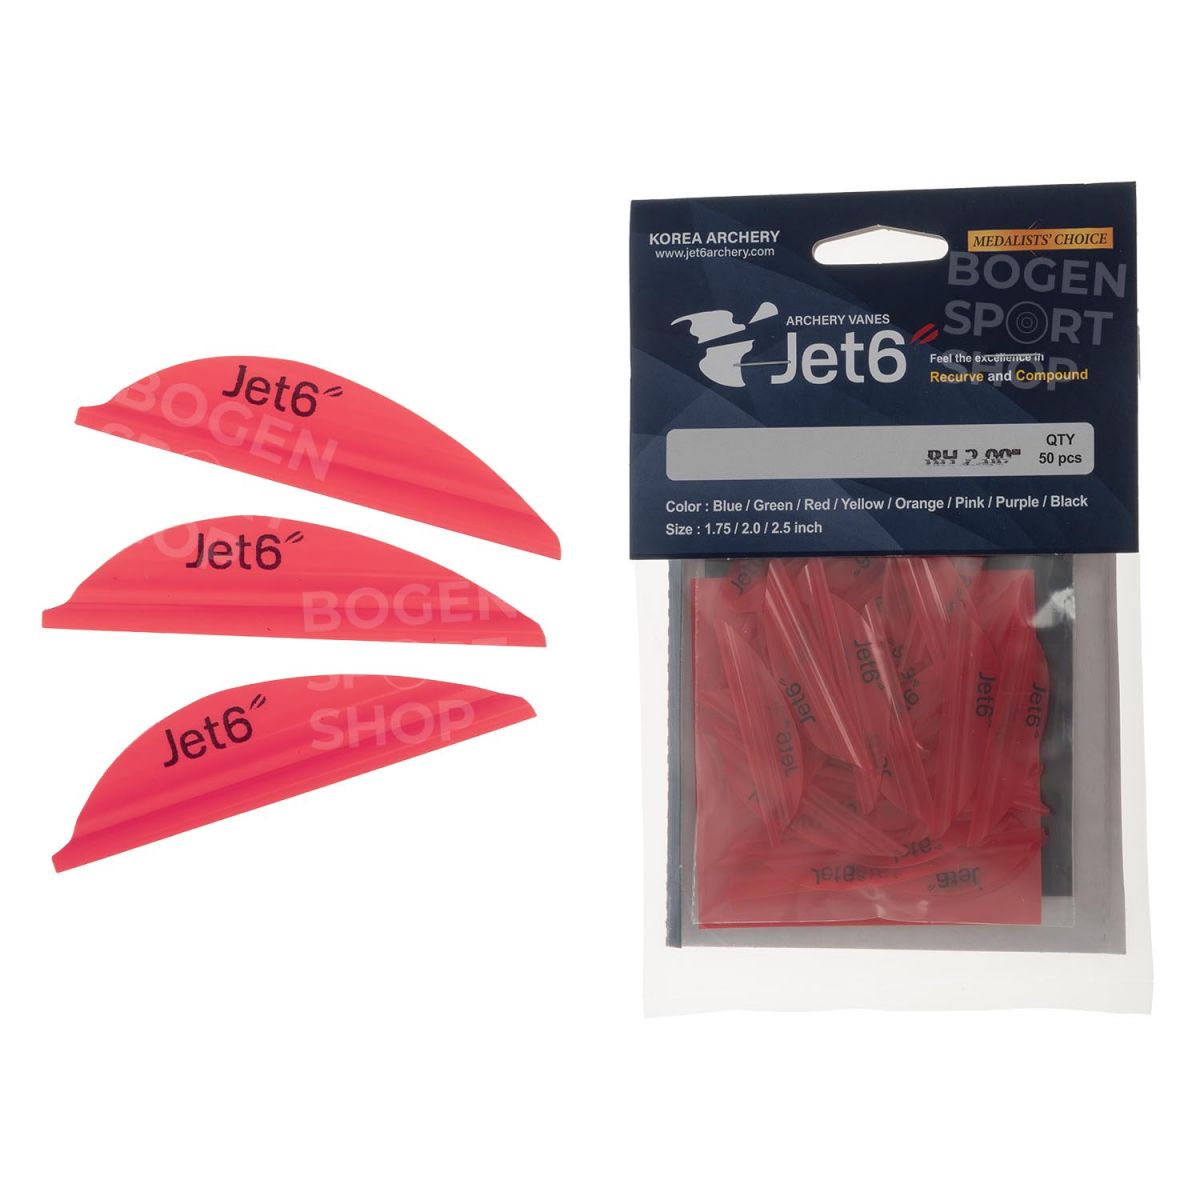 Jet6 Vanes 2,0" (50 Stk.)